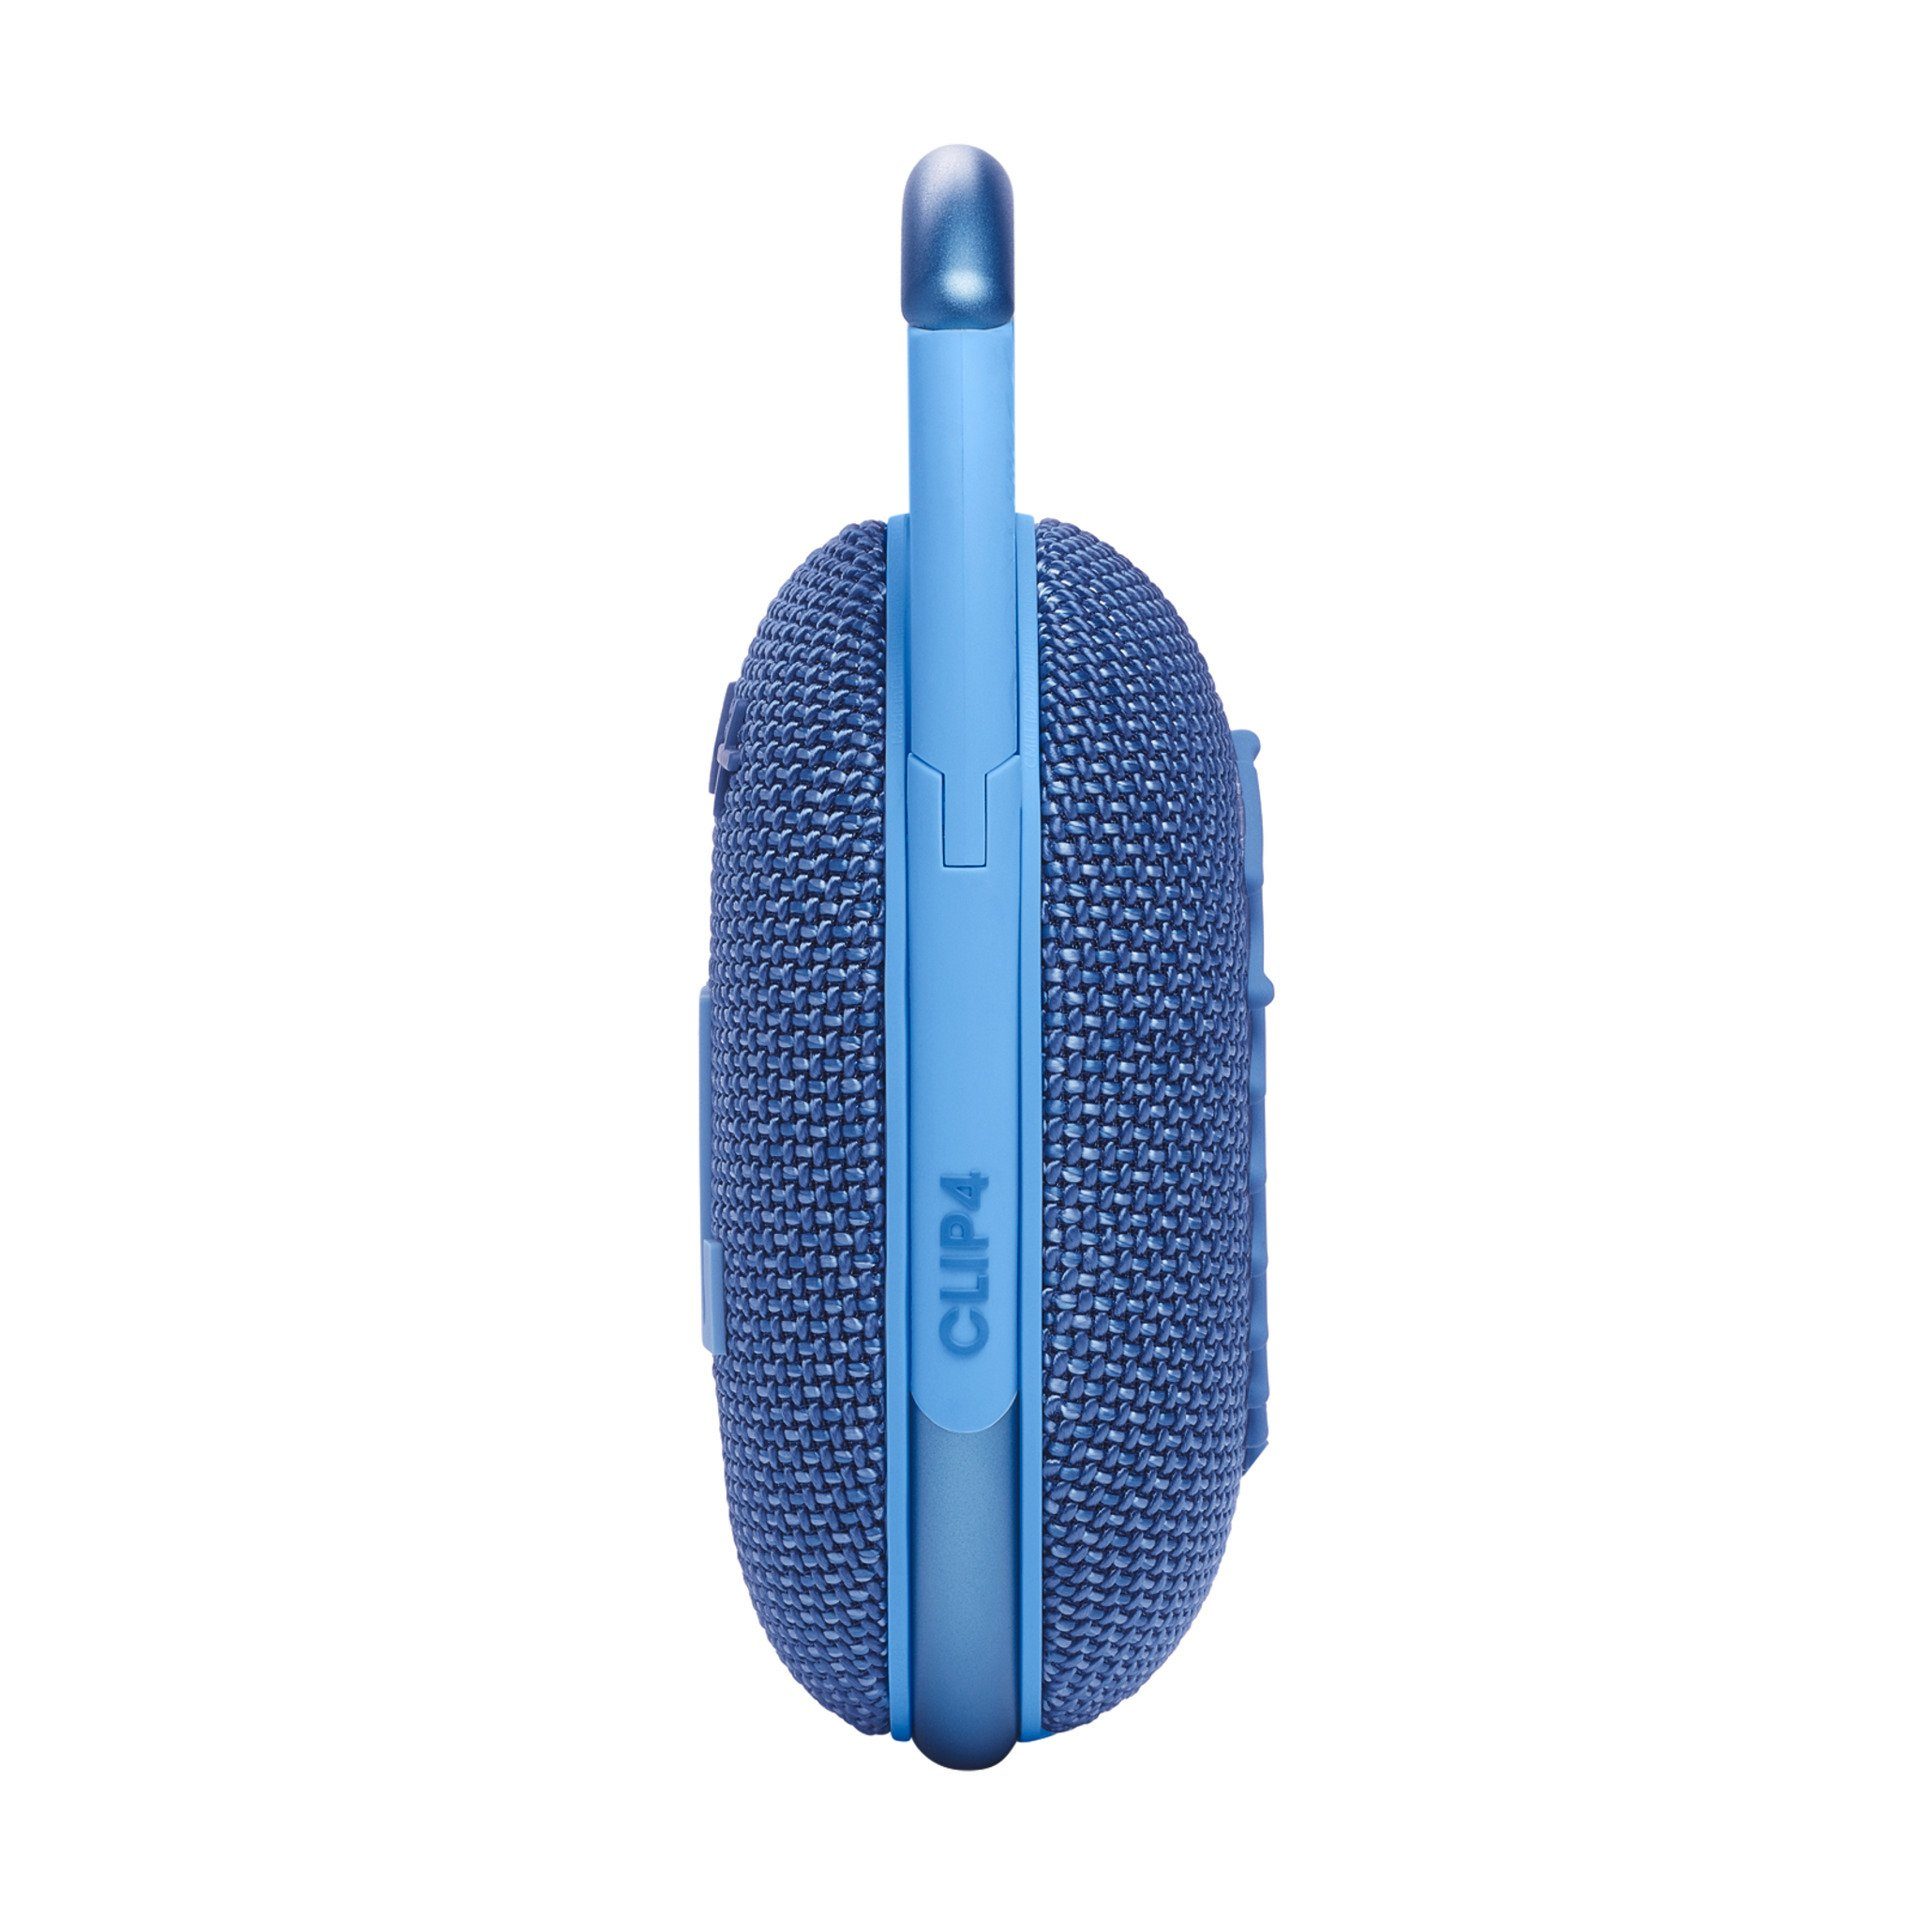 ECO 5 4 W) Clip Bluetooth-Lautsprecher (Bluetooth, JBL Blau